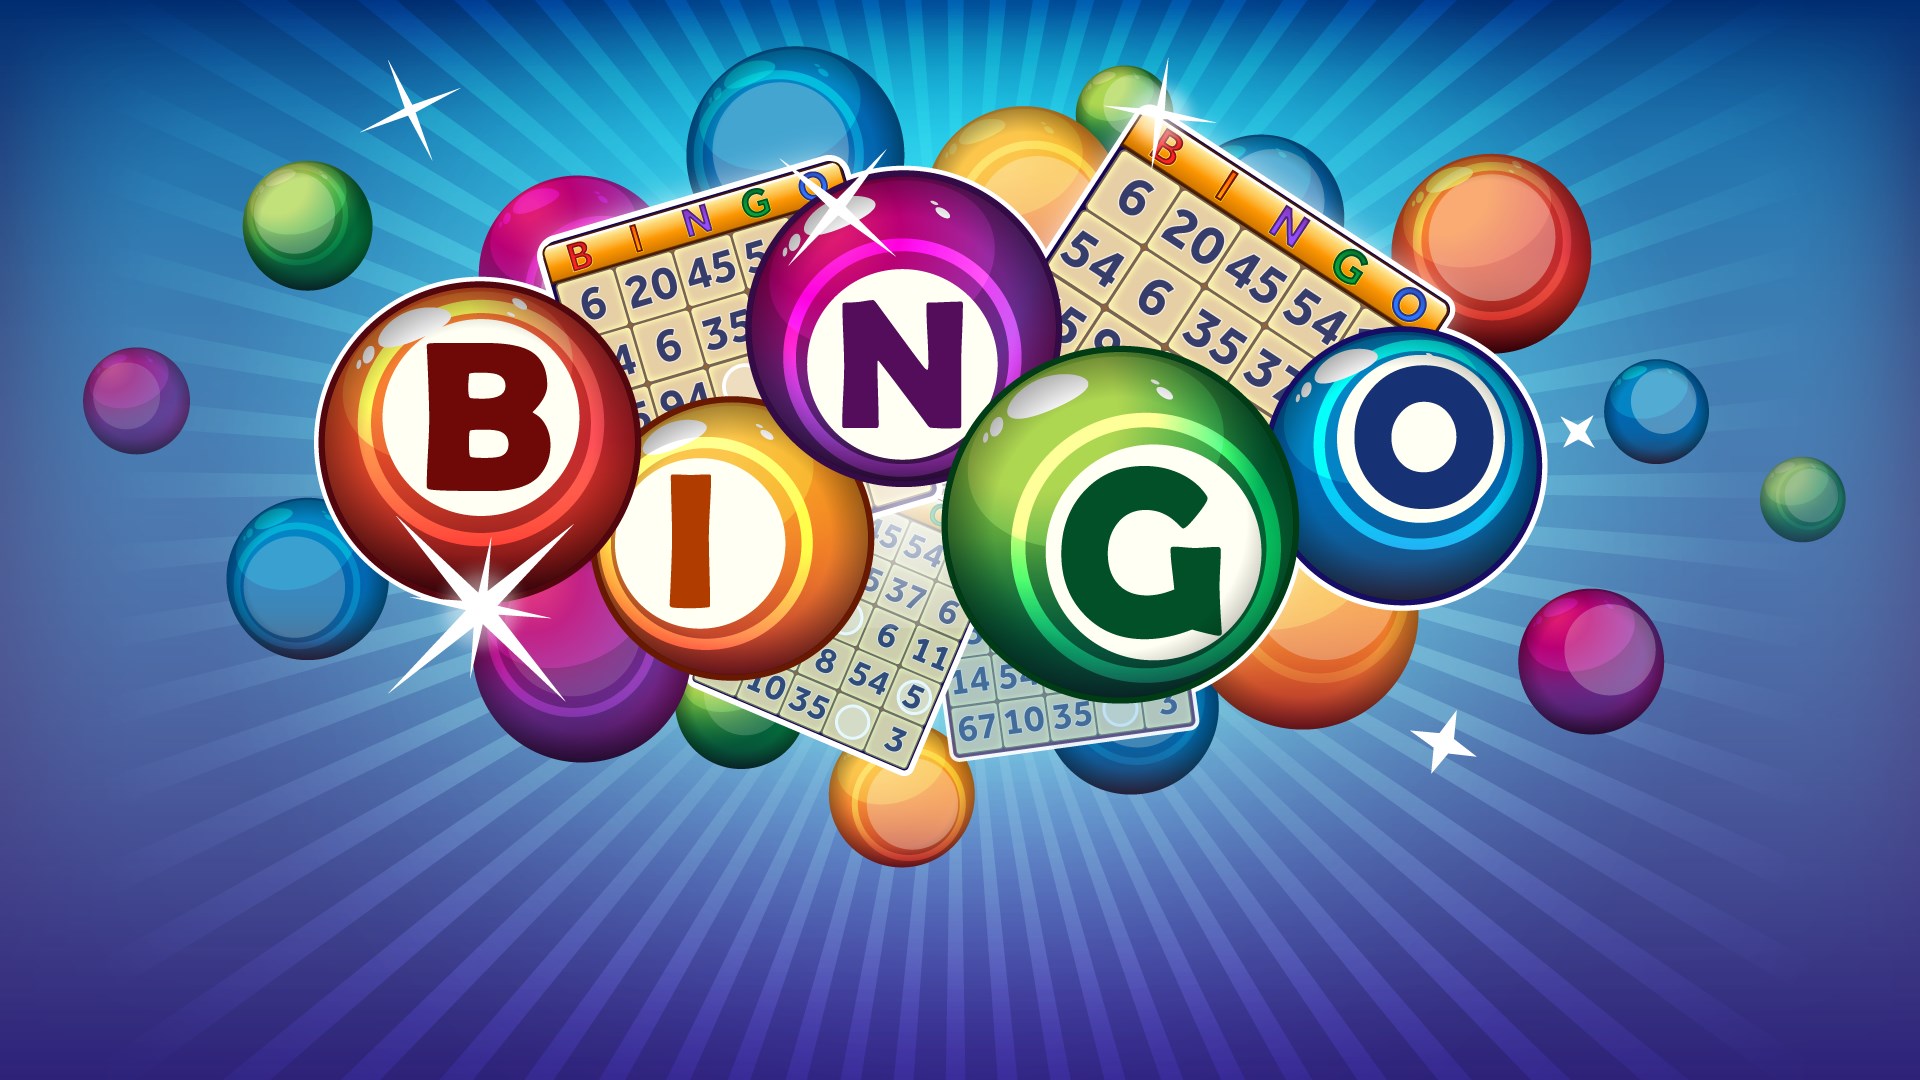 most-popular-branded-bingo-games-you-can-play-online-great-bridge-links